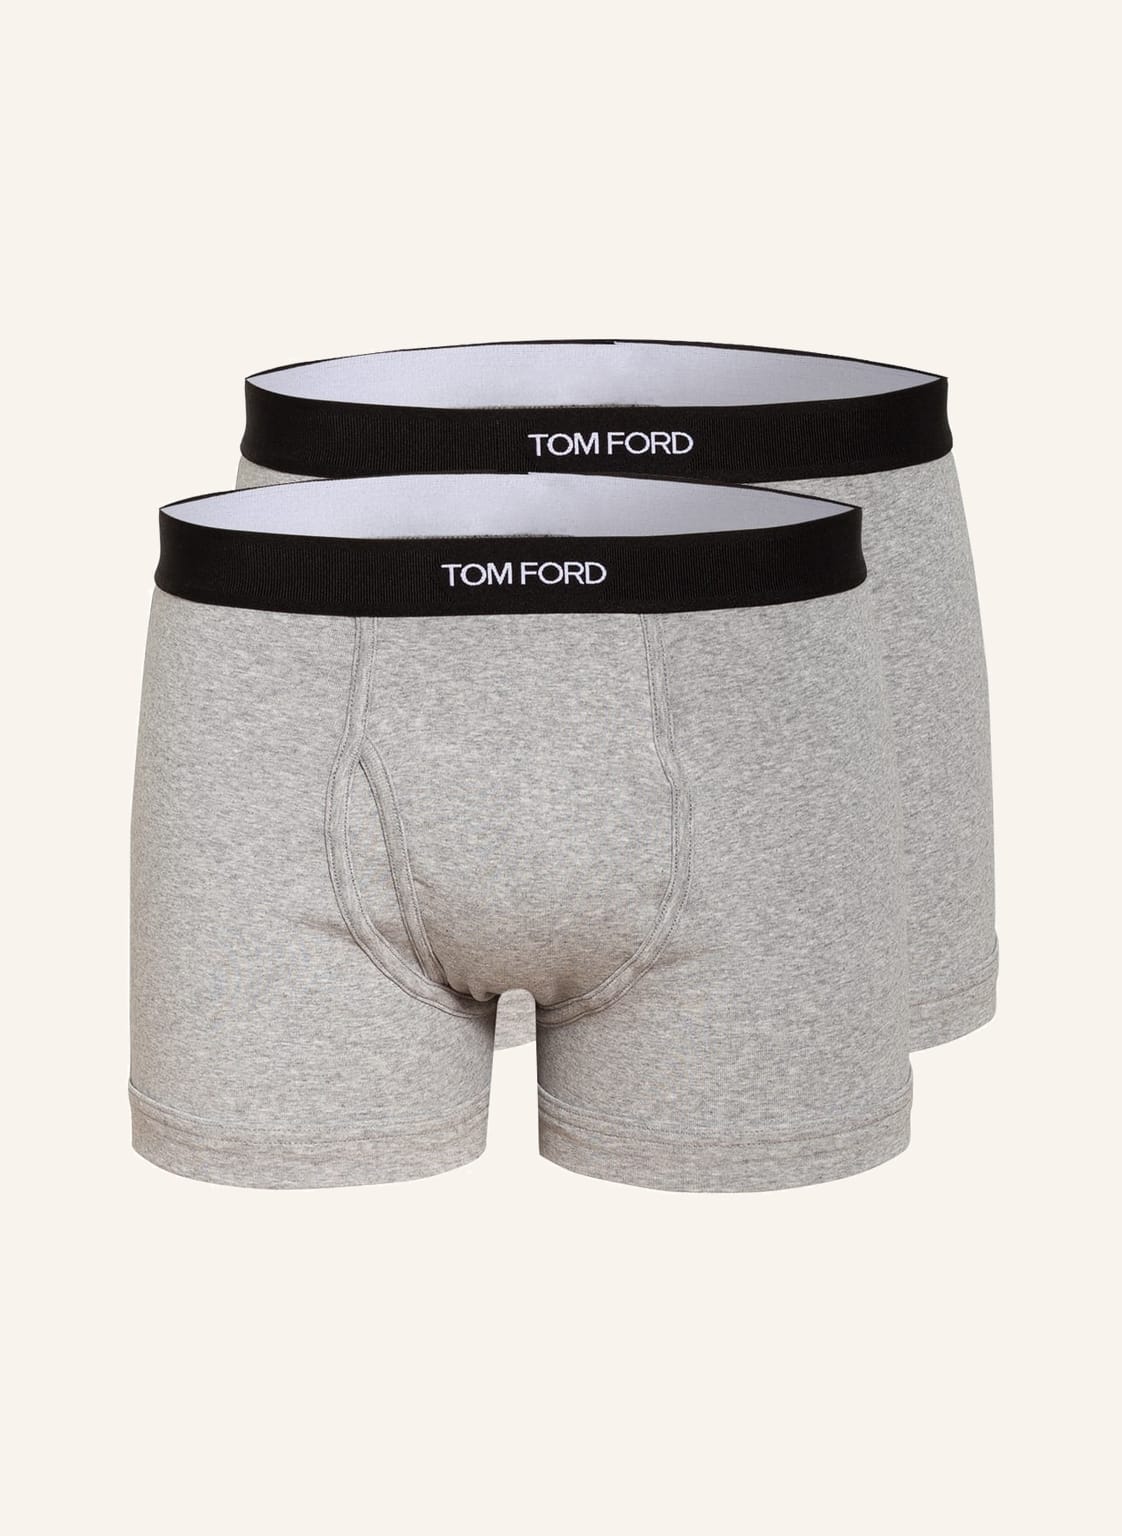 Tom Ford 2er-Pack Boxershorts grau von Tom Ford